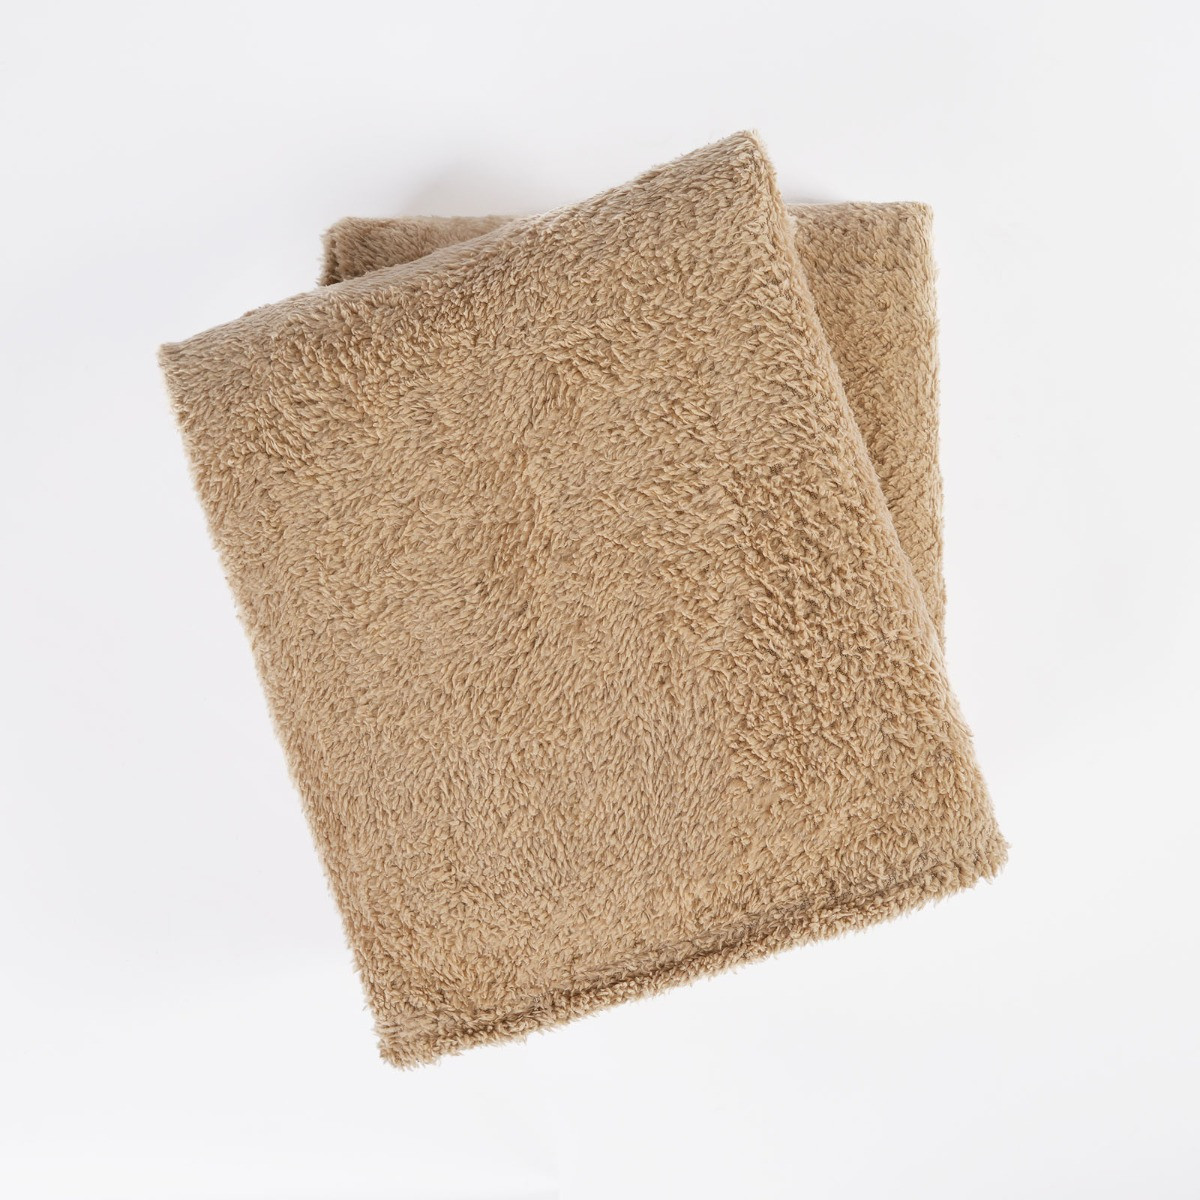 Brentfords Teddy Fleece Blanket Throw, Natural Latte Beige - 60 x 80 inches>